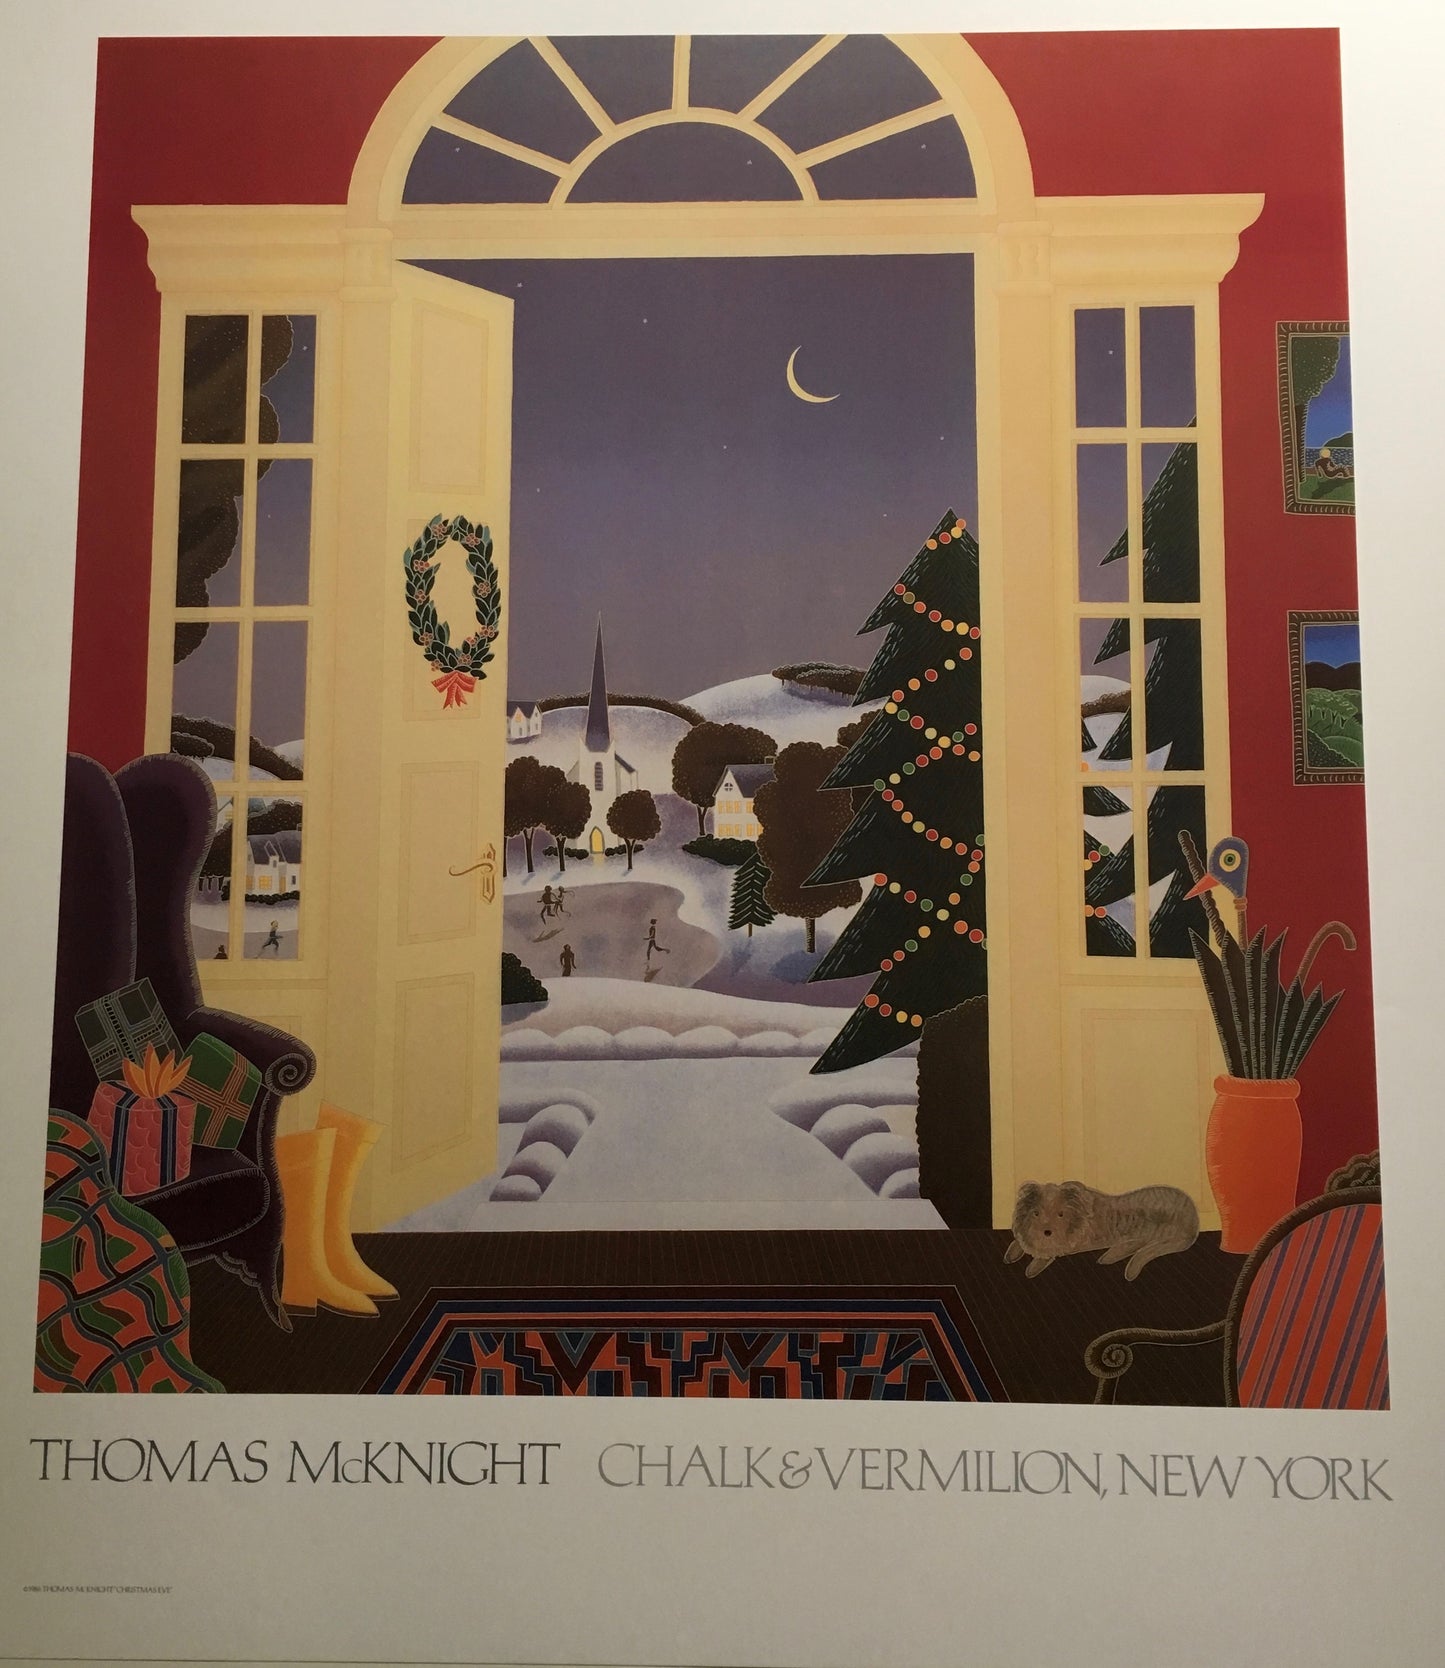 Thomas McKnight "Christmas Eve" 1986 (27w x 31t)